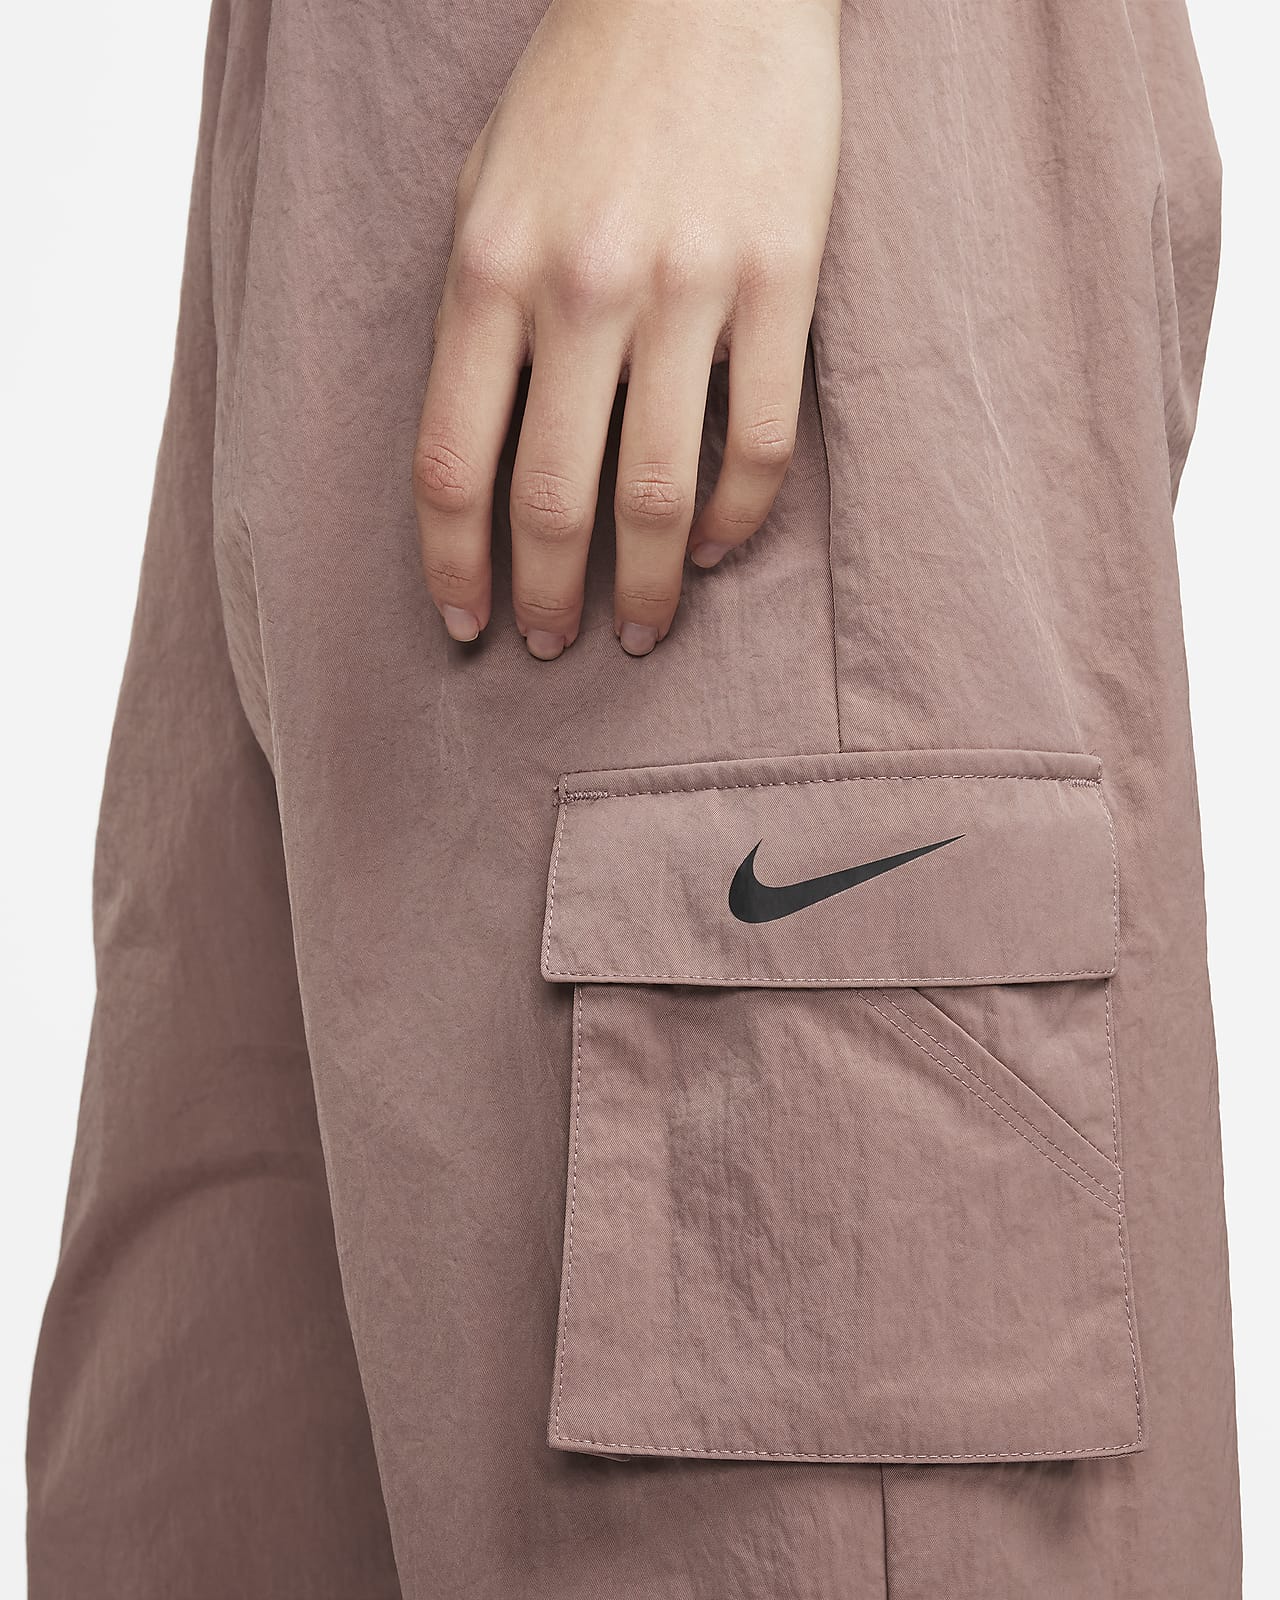 Pantalones cargo tejido de tiro alto para mujer Nike Sportswear Essential.